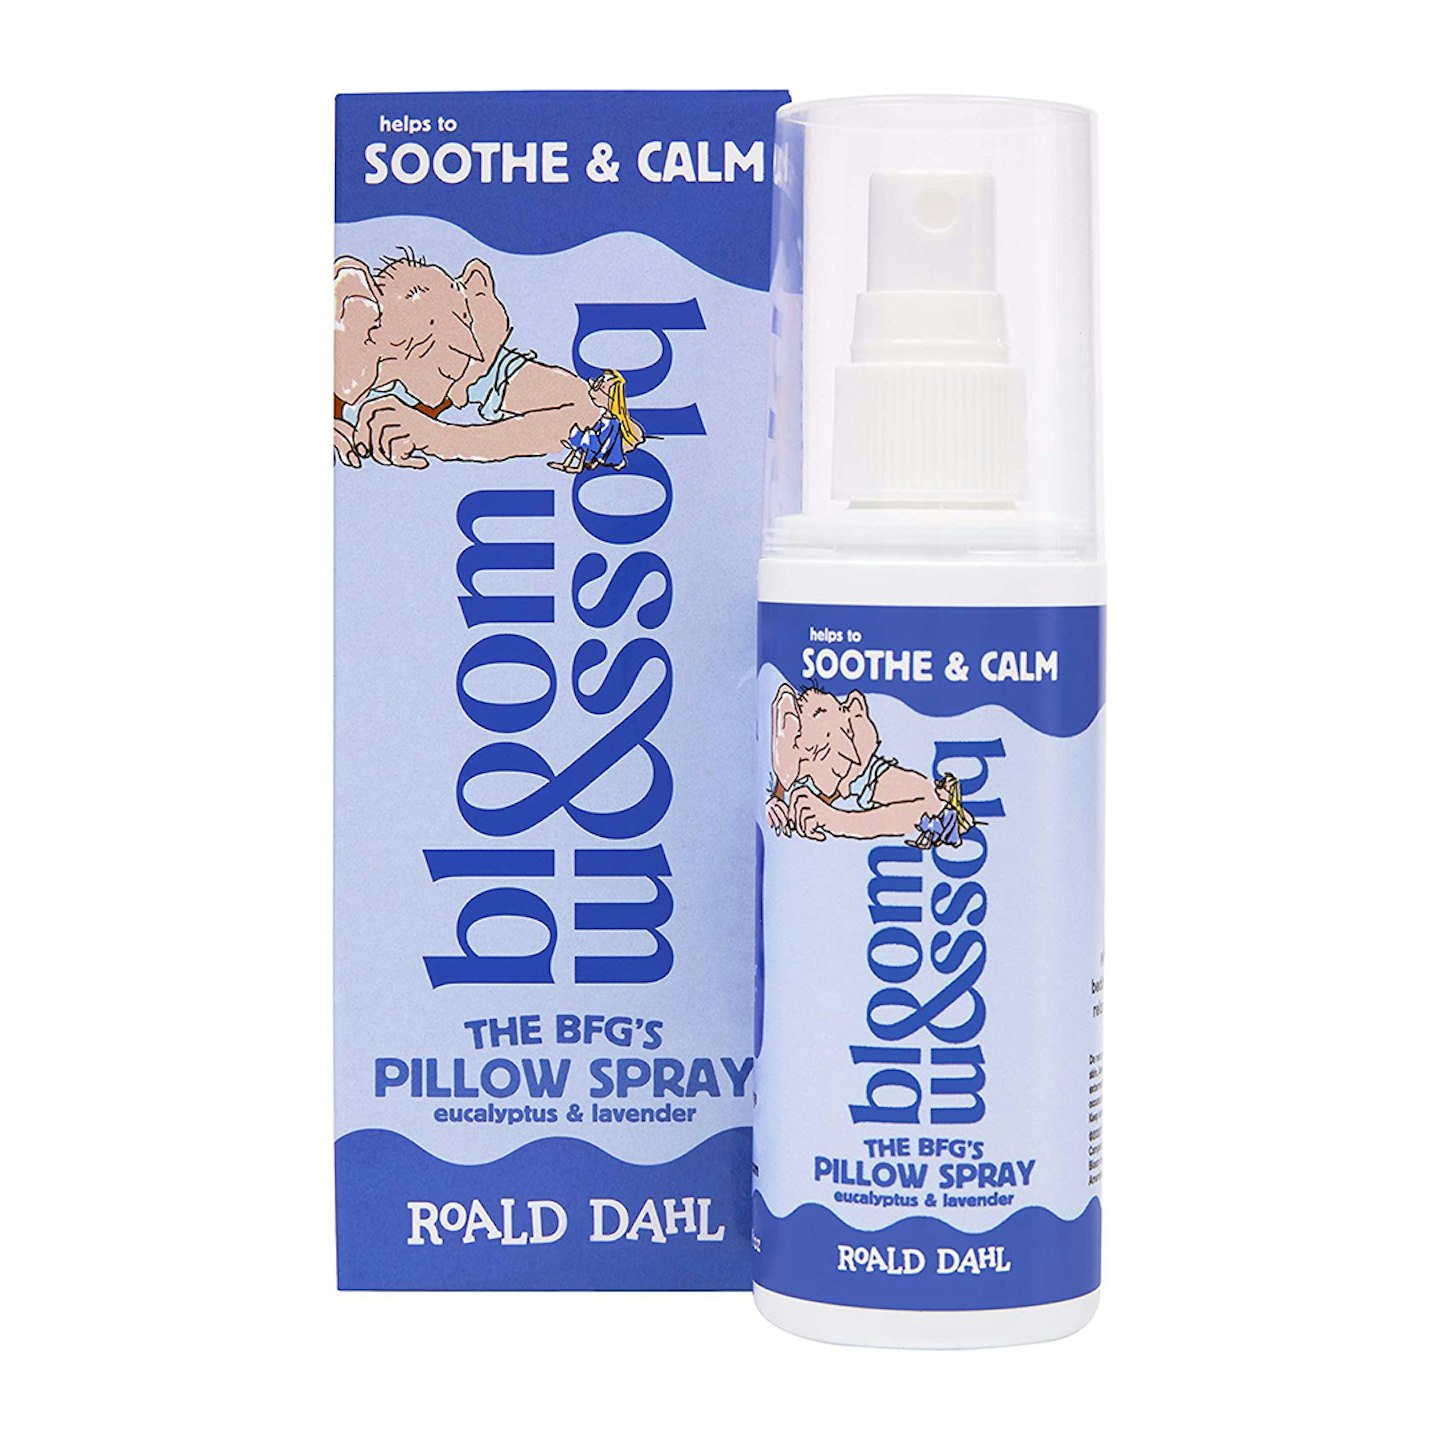 Bloom & Blossom - Pillow Spray 75ml - The BFG